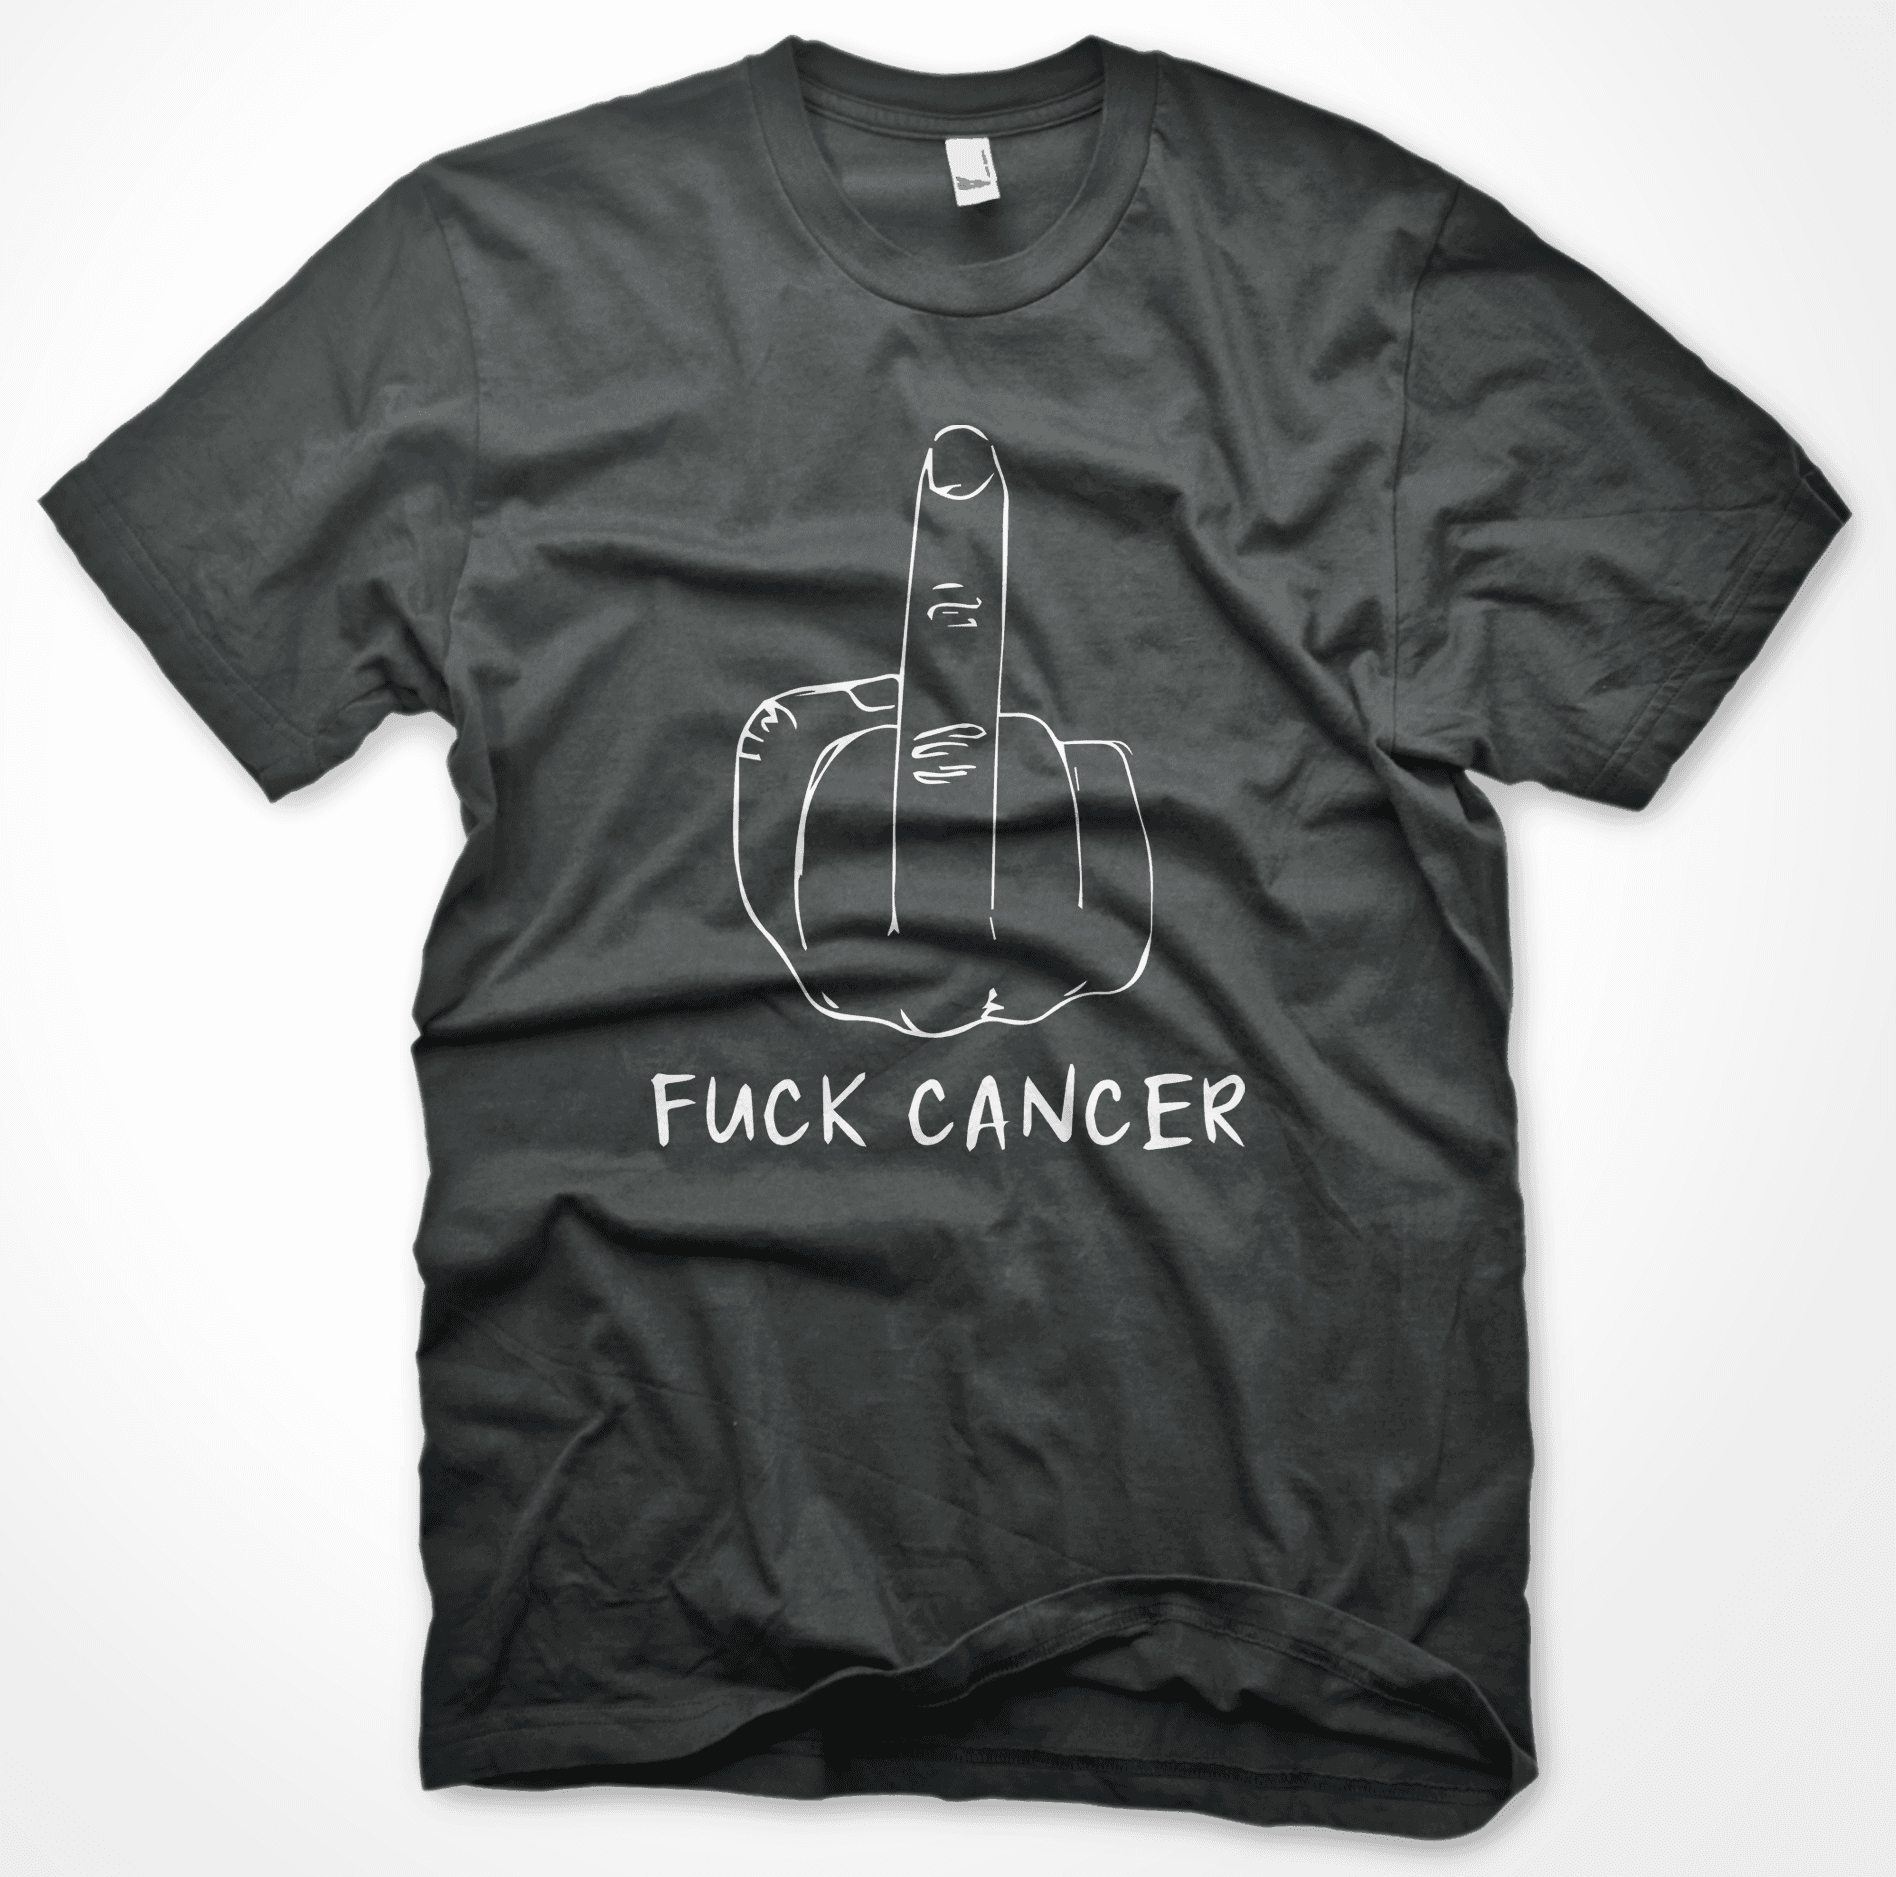 FUCK CANCER - SORT TSHIRT  (Limited edition)